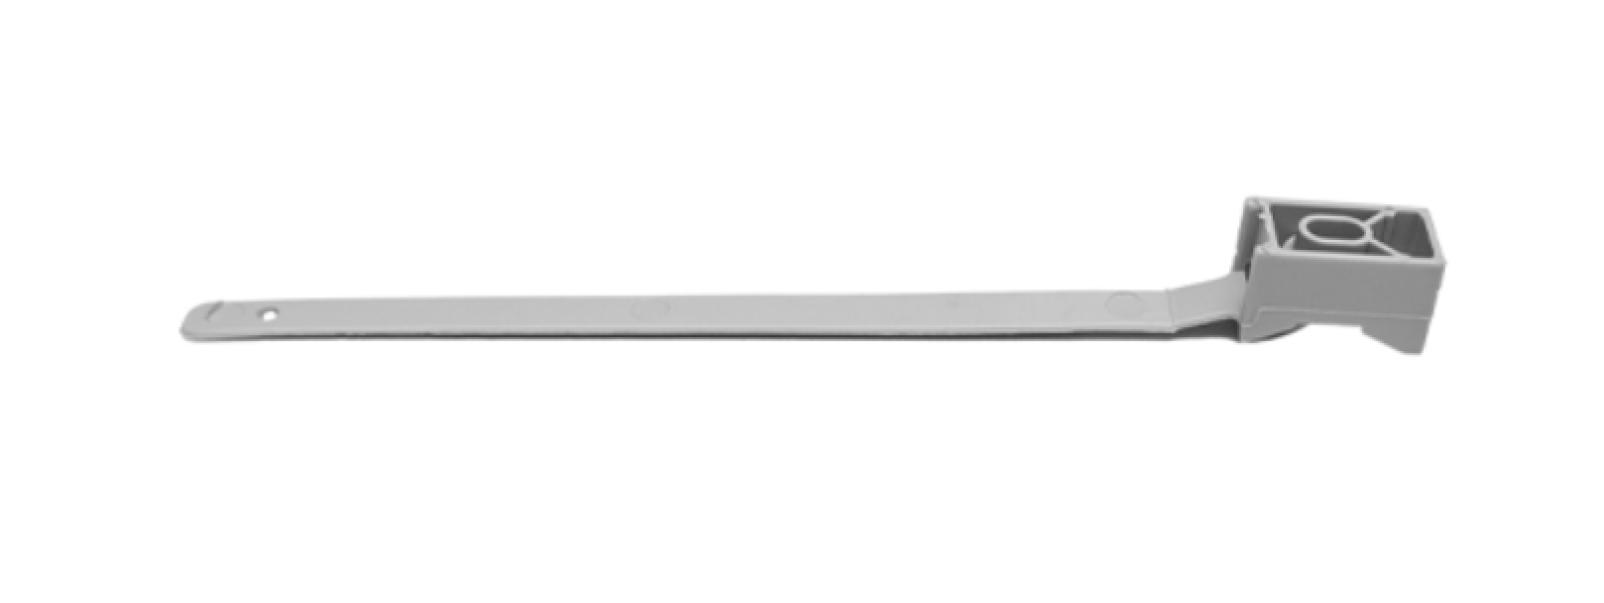 Fissatubo a fascetta Tubifor diametro 16-32mm grigio 10pz - BSFF00016GS 01